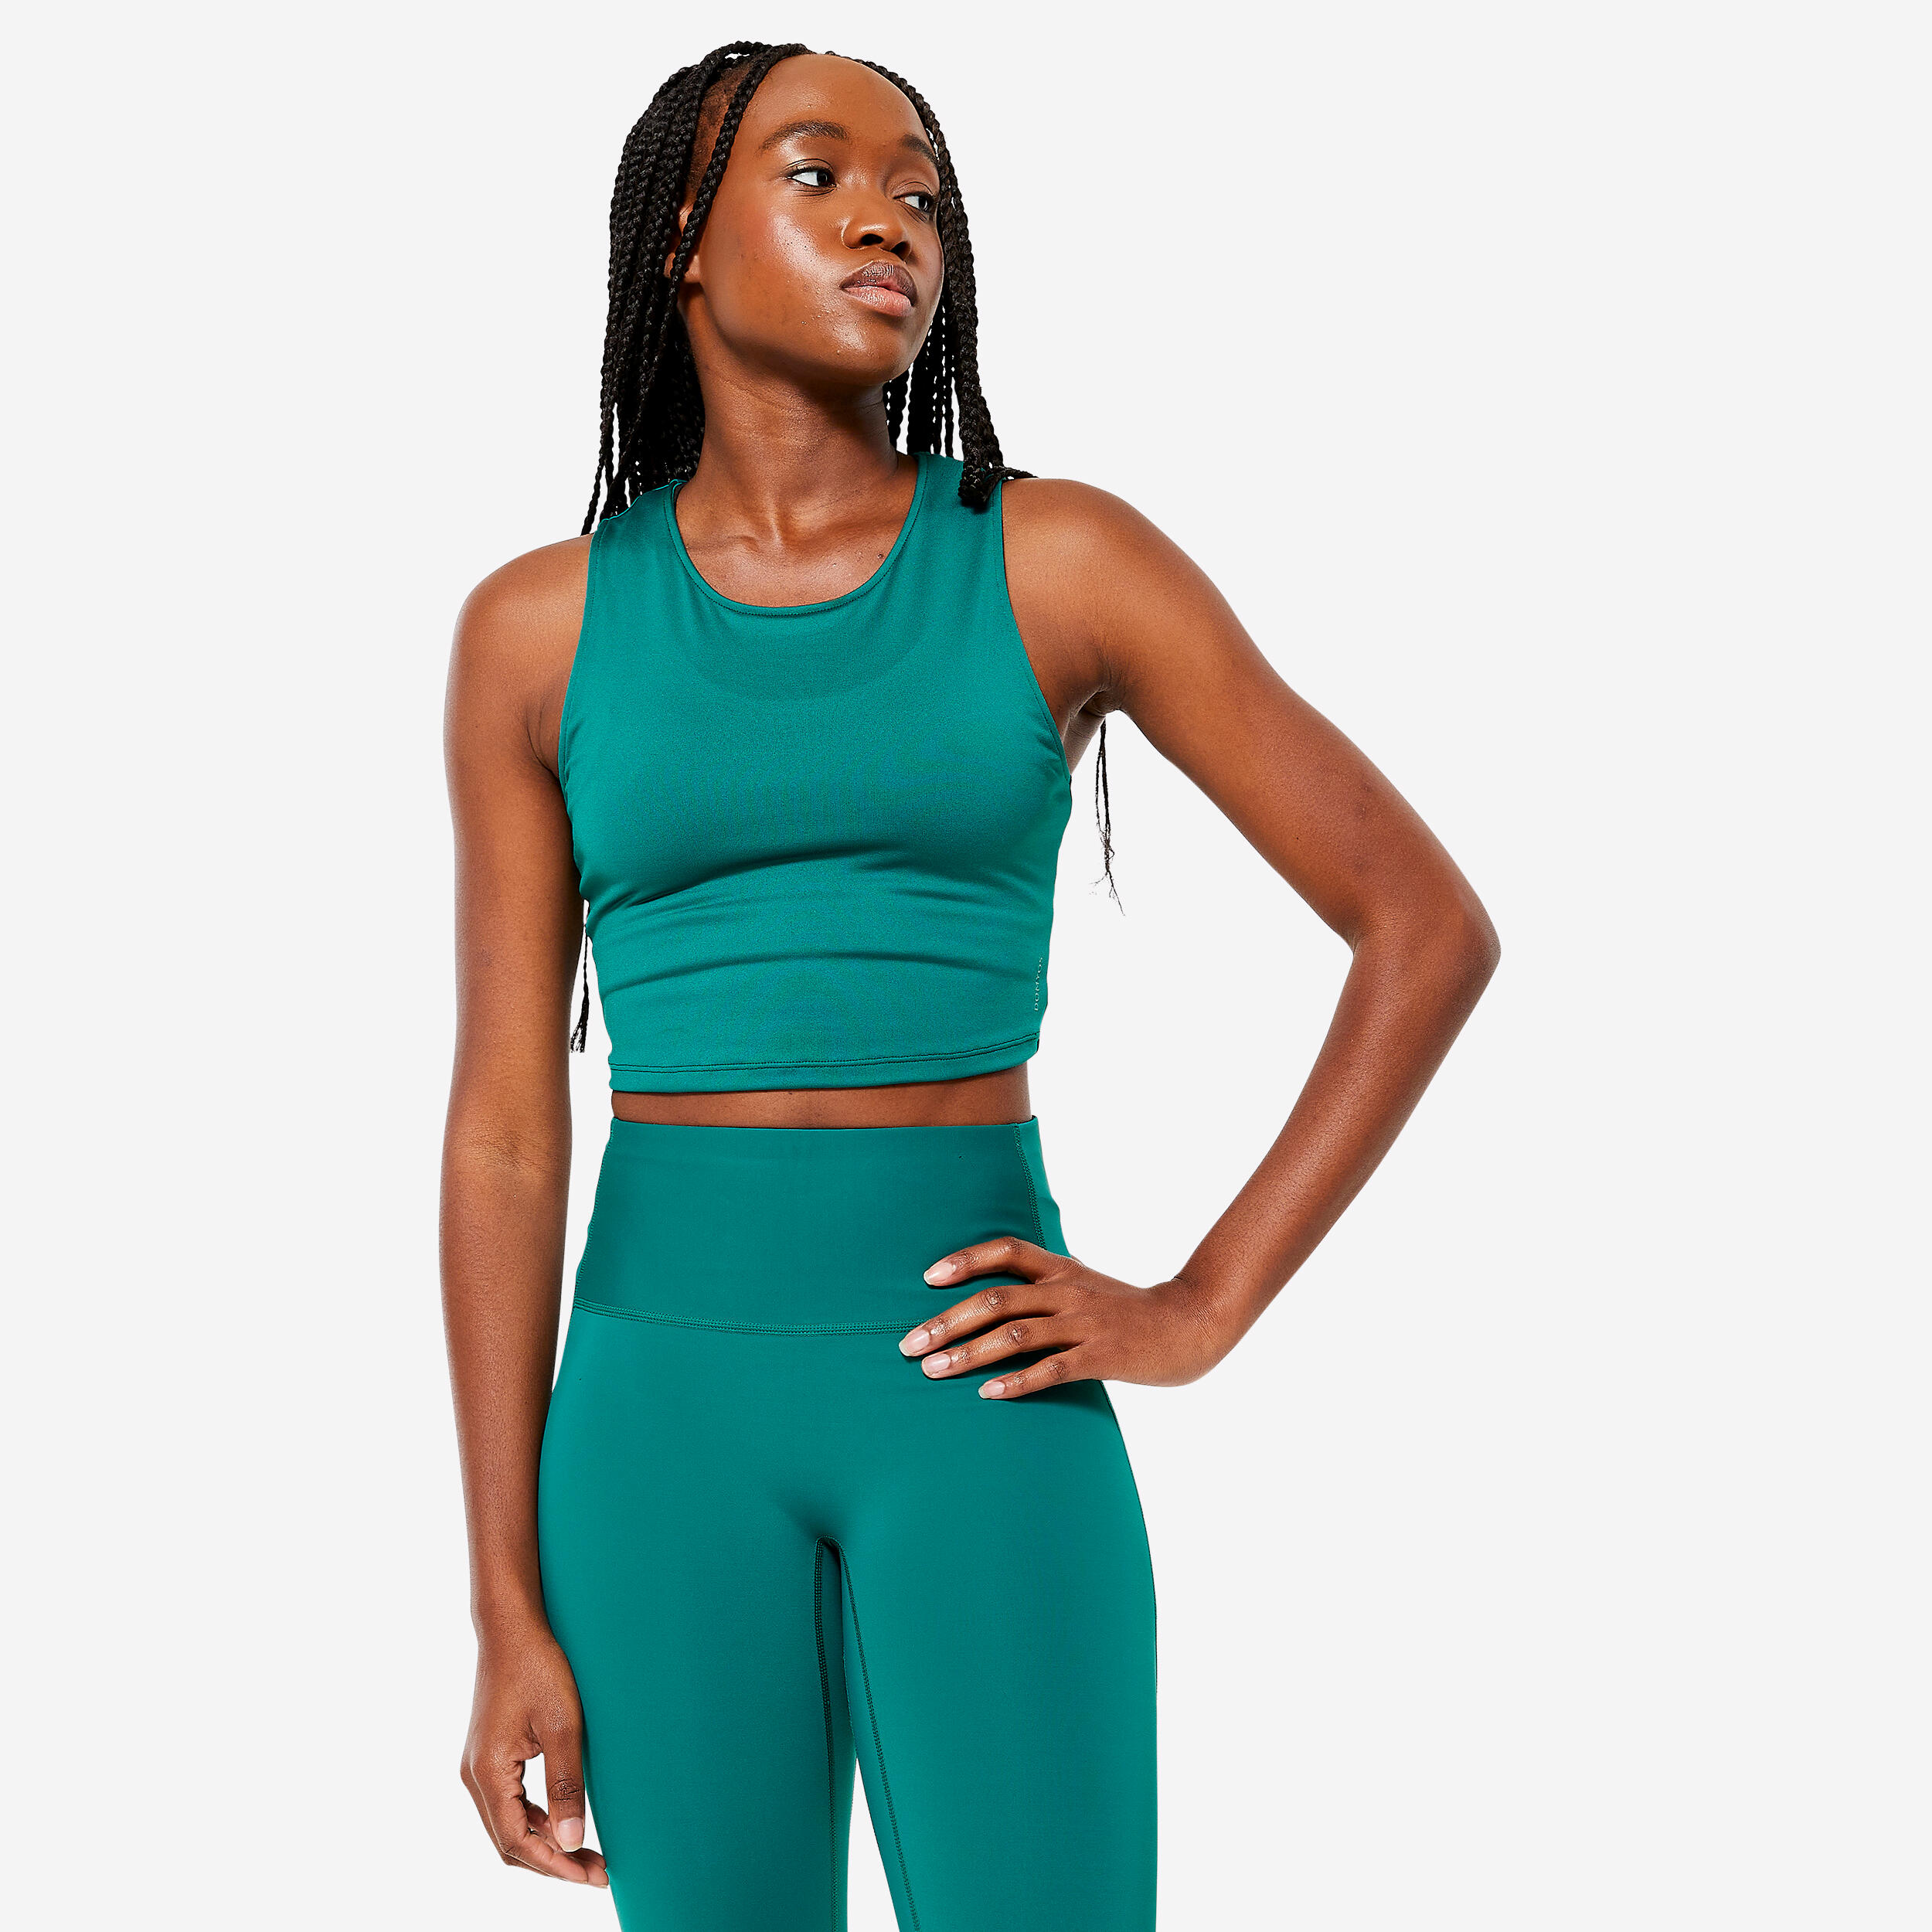 DOMYOS Women's Cardio Fitness Cropped Tank Top - Green